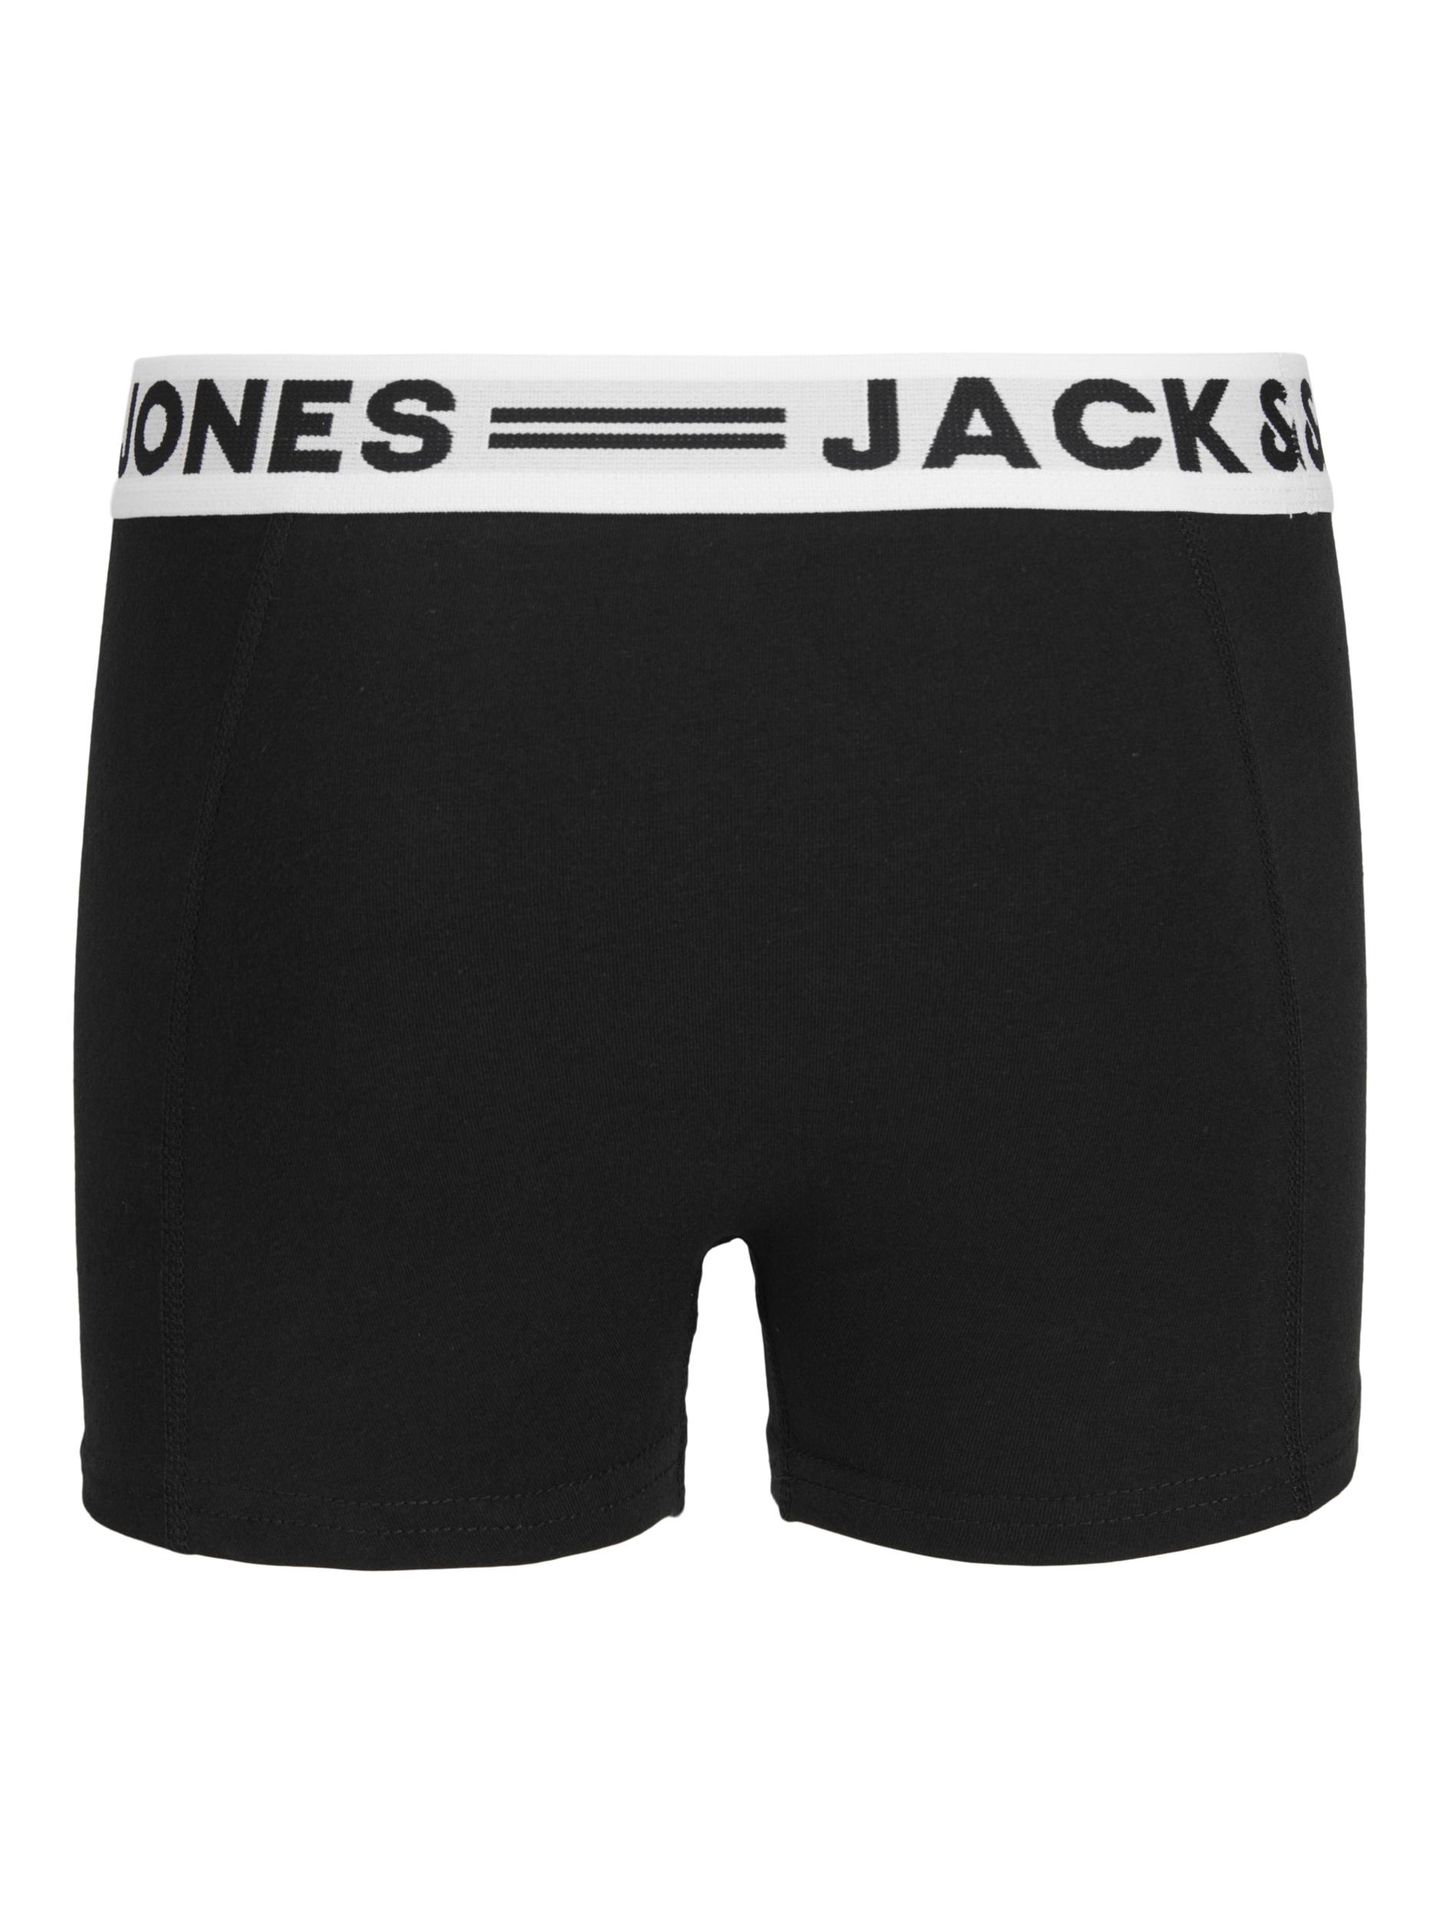 Jack & Jones SENSE TRUNKS 3-PACK NOOS JNR - Black/Black & Black Black/LOOSE 00095275-EKA26011400000260